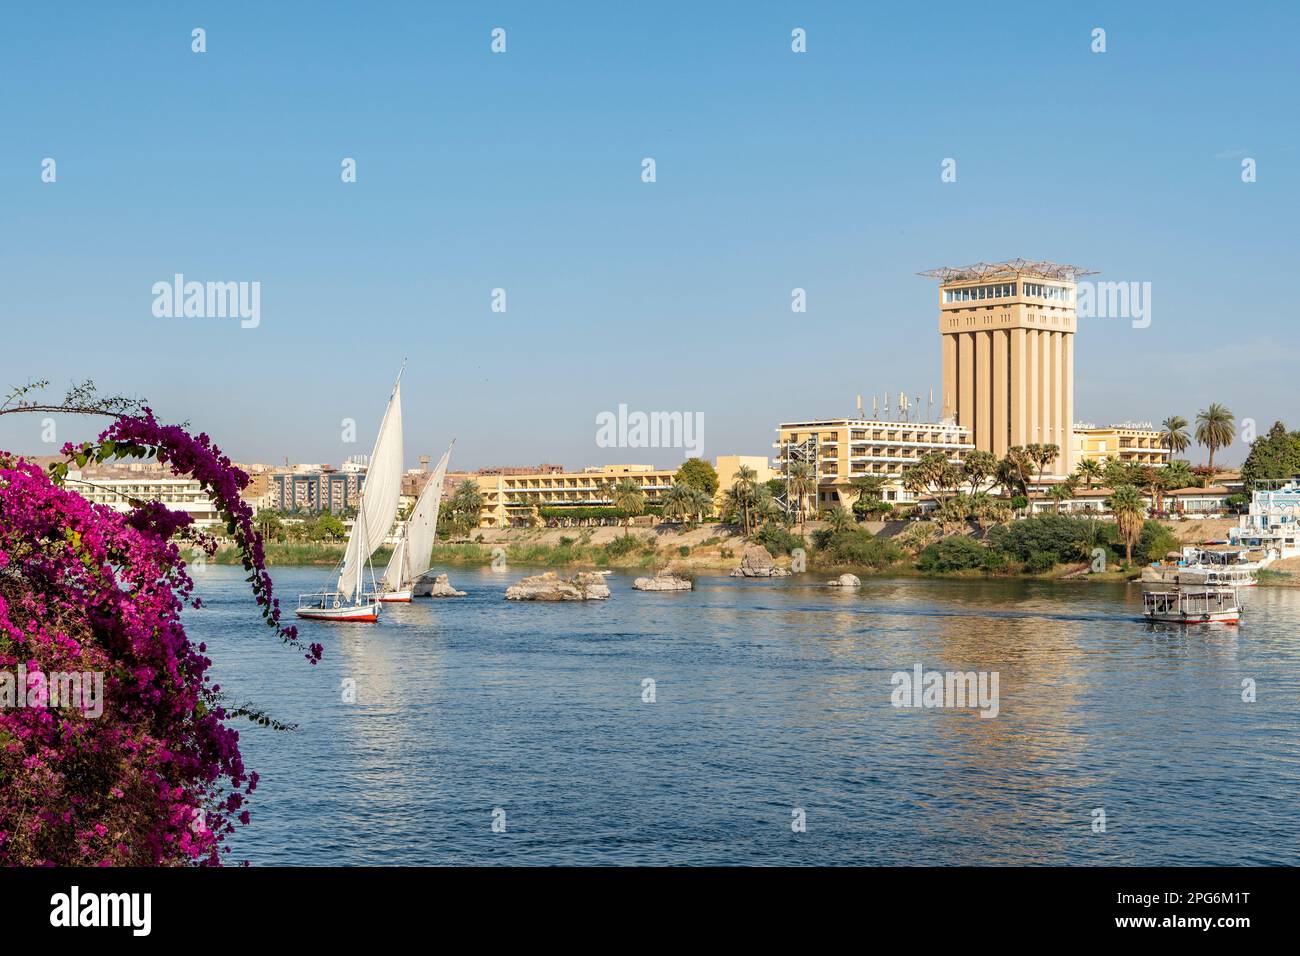 Movenpick Hotel on River Nile, Aswan, Egypt Stock Photo